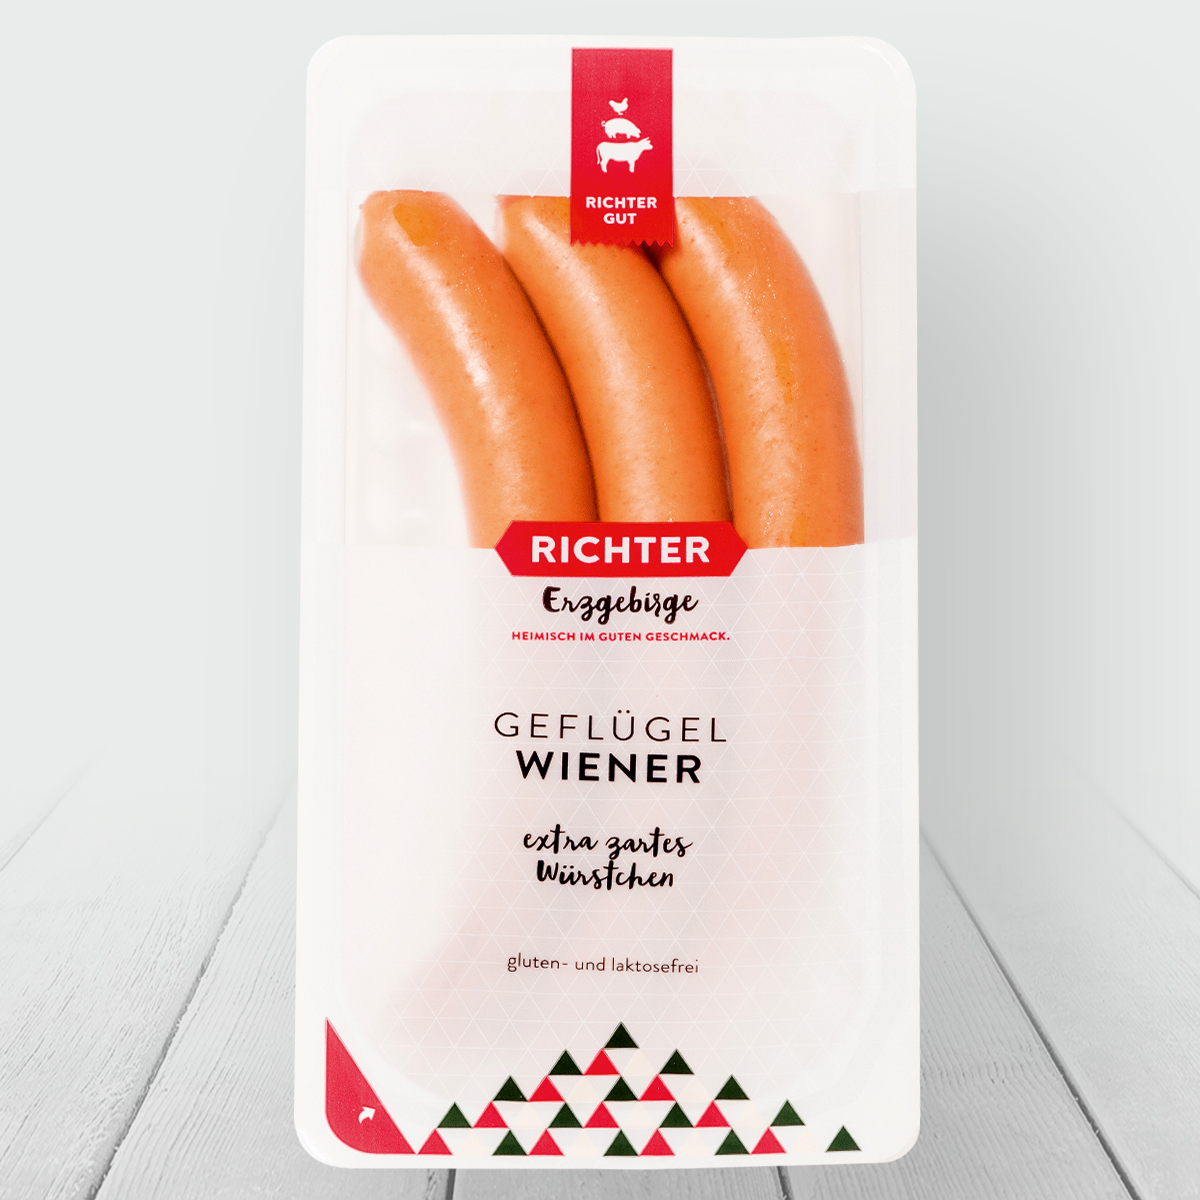 Geflügel Wiener in Verpackung